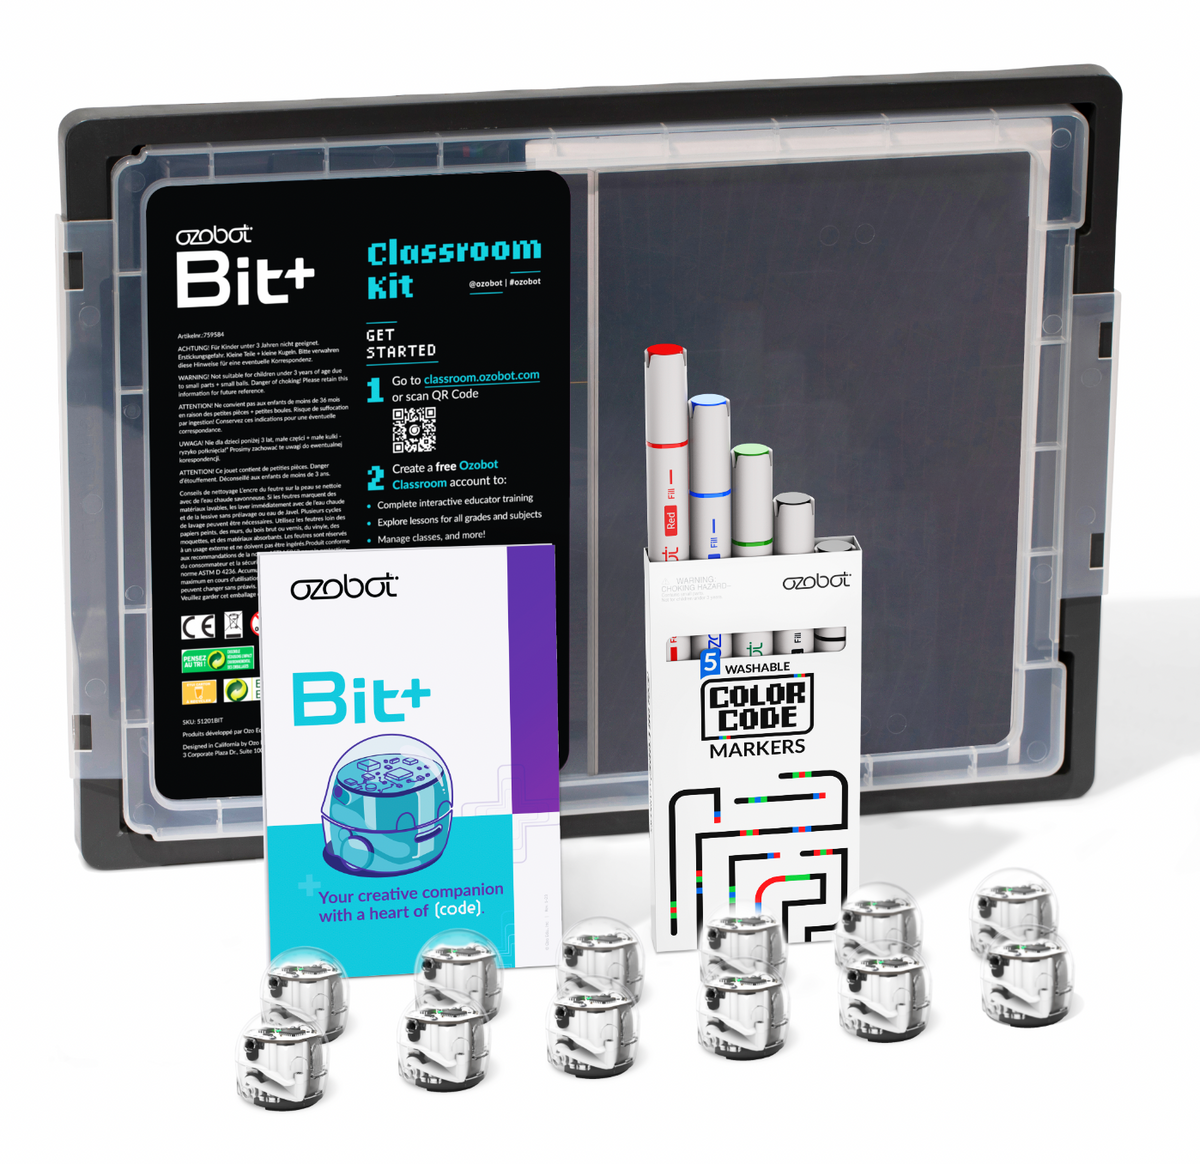 Ozobot Bit+ Classroom Kit (12-pack)